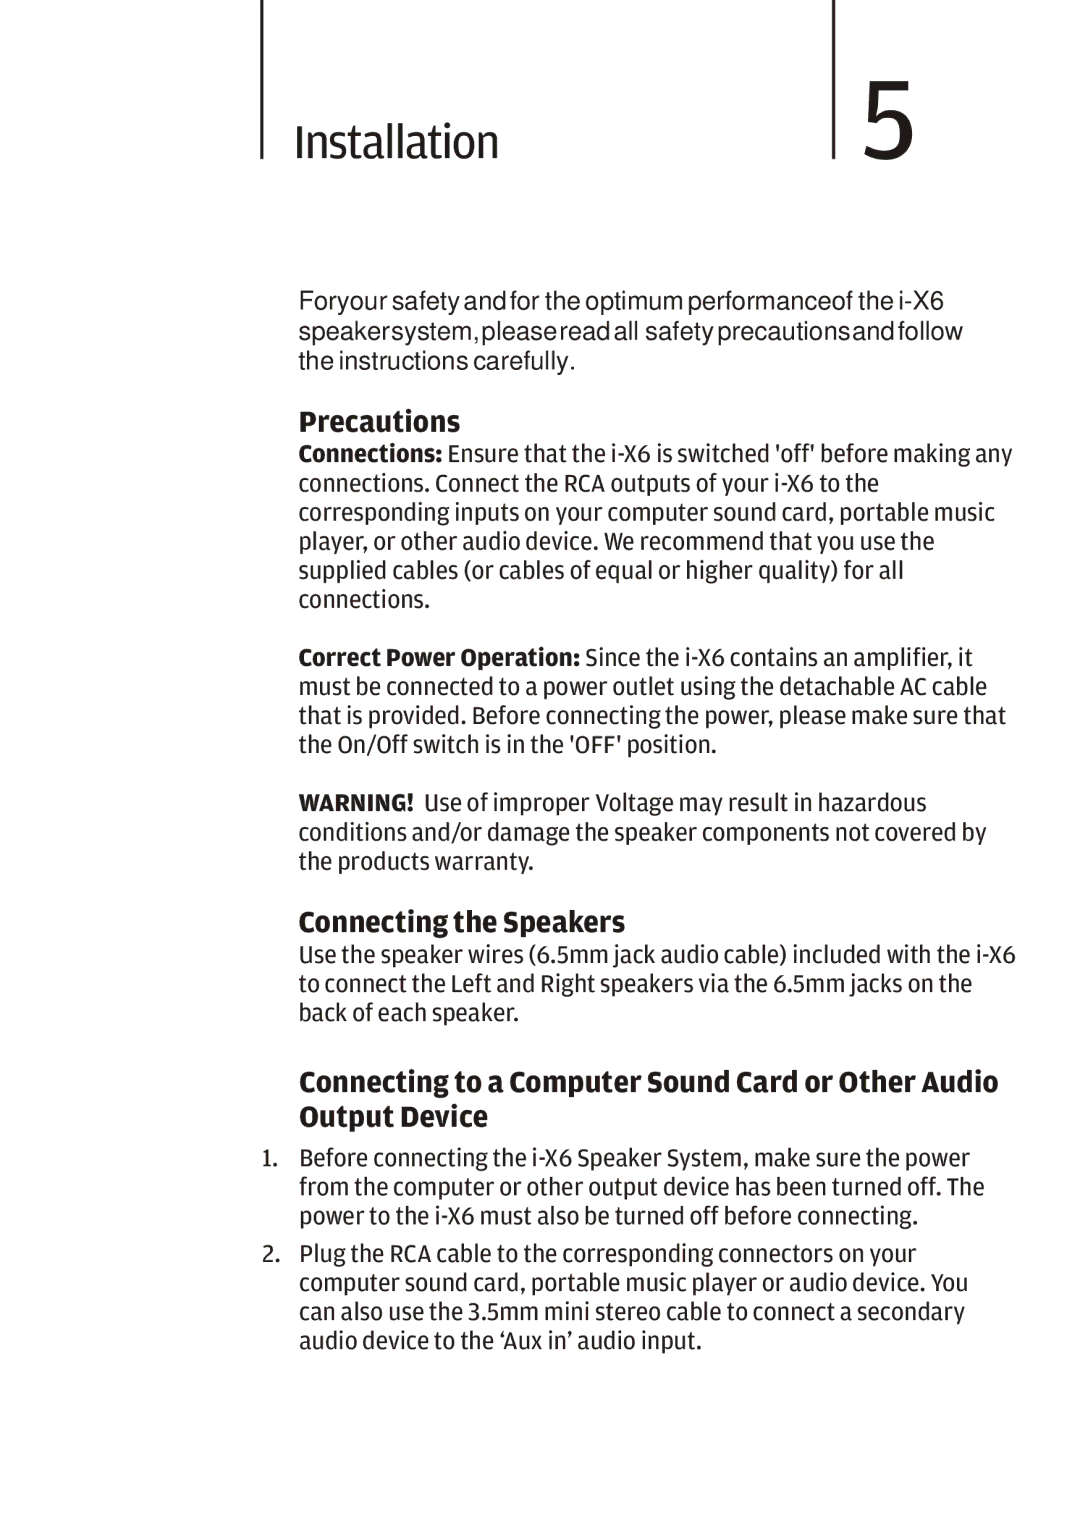 Cygnett i-x6 manual Installation5, Precautions, Connecting the Speakers 